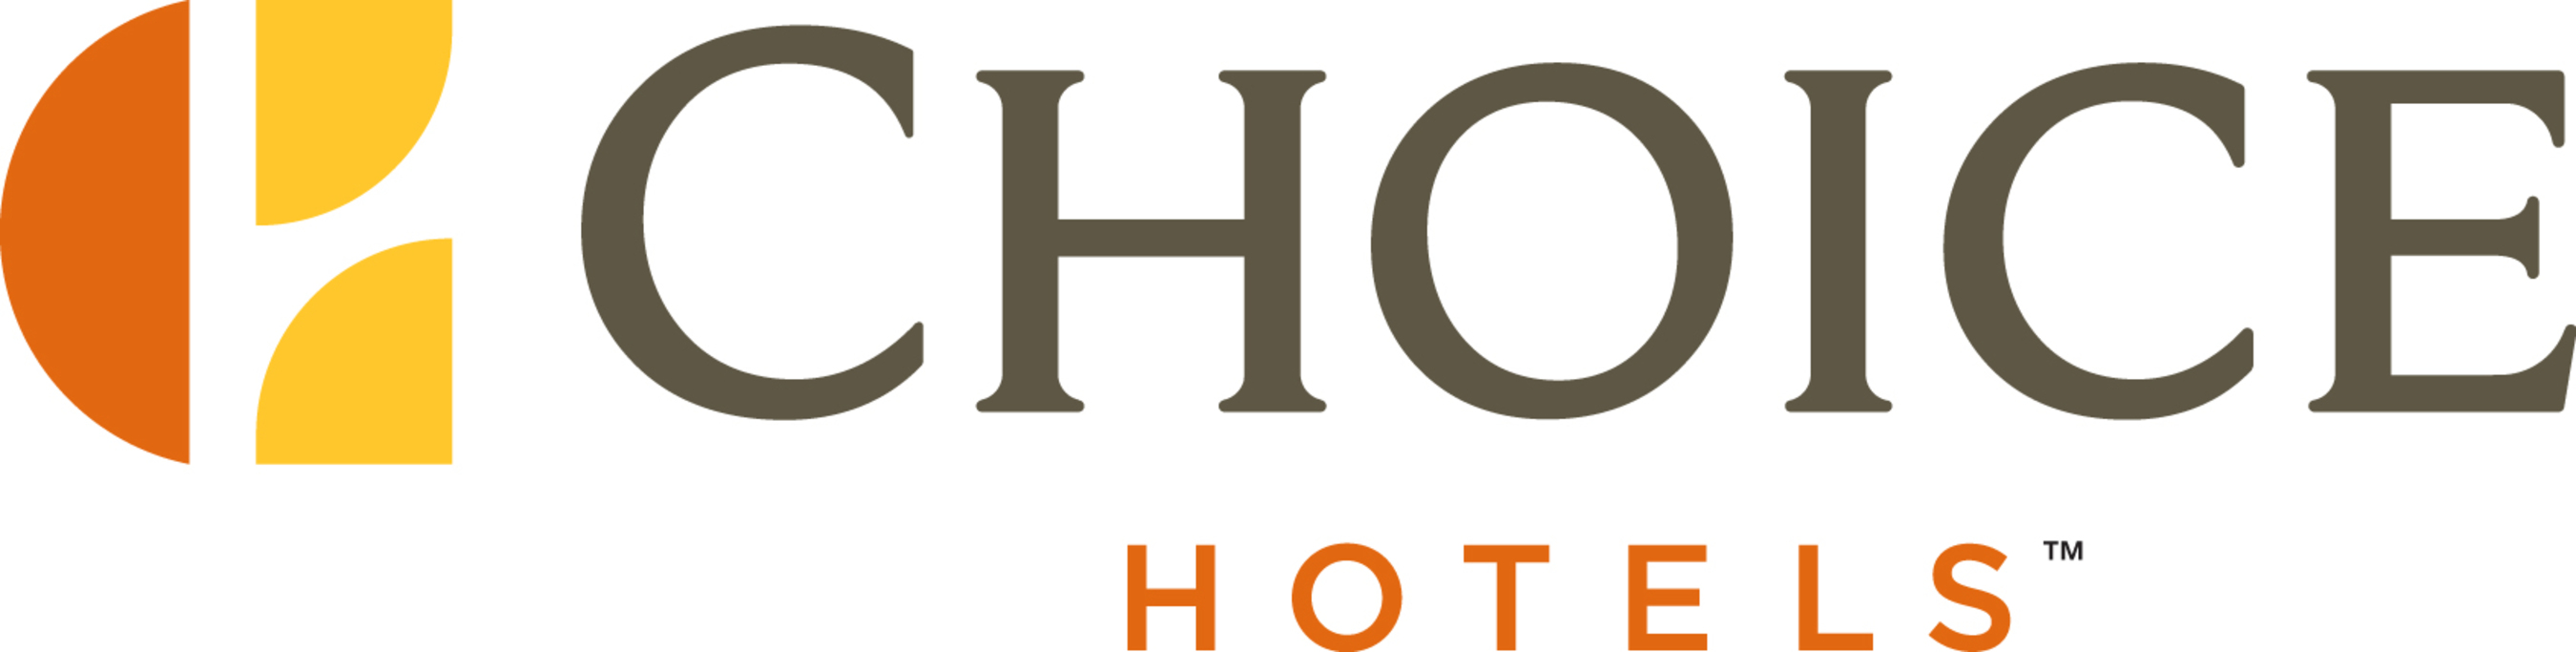 Choice Hotels International. (PRNewsFoto/Choice Hotels International) (PRNewsFoto/CHOICE HOTELS INTERNATIONAL)